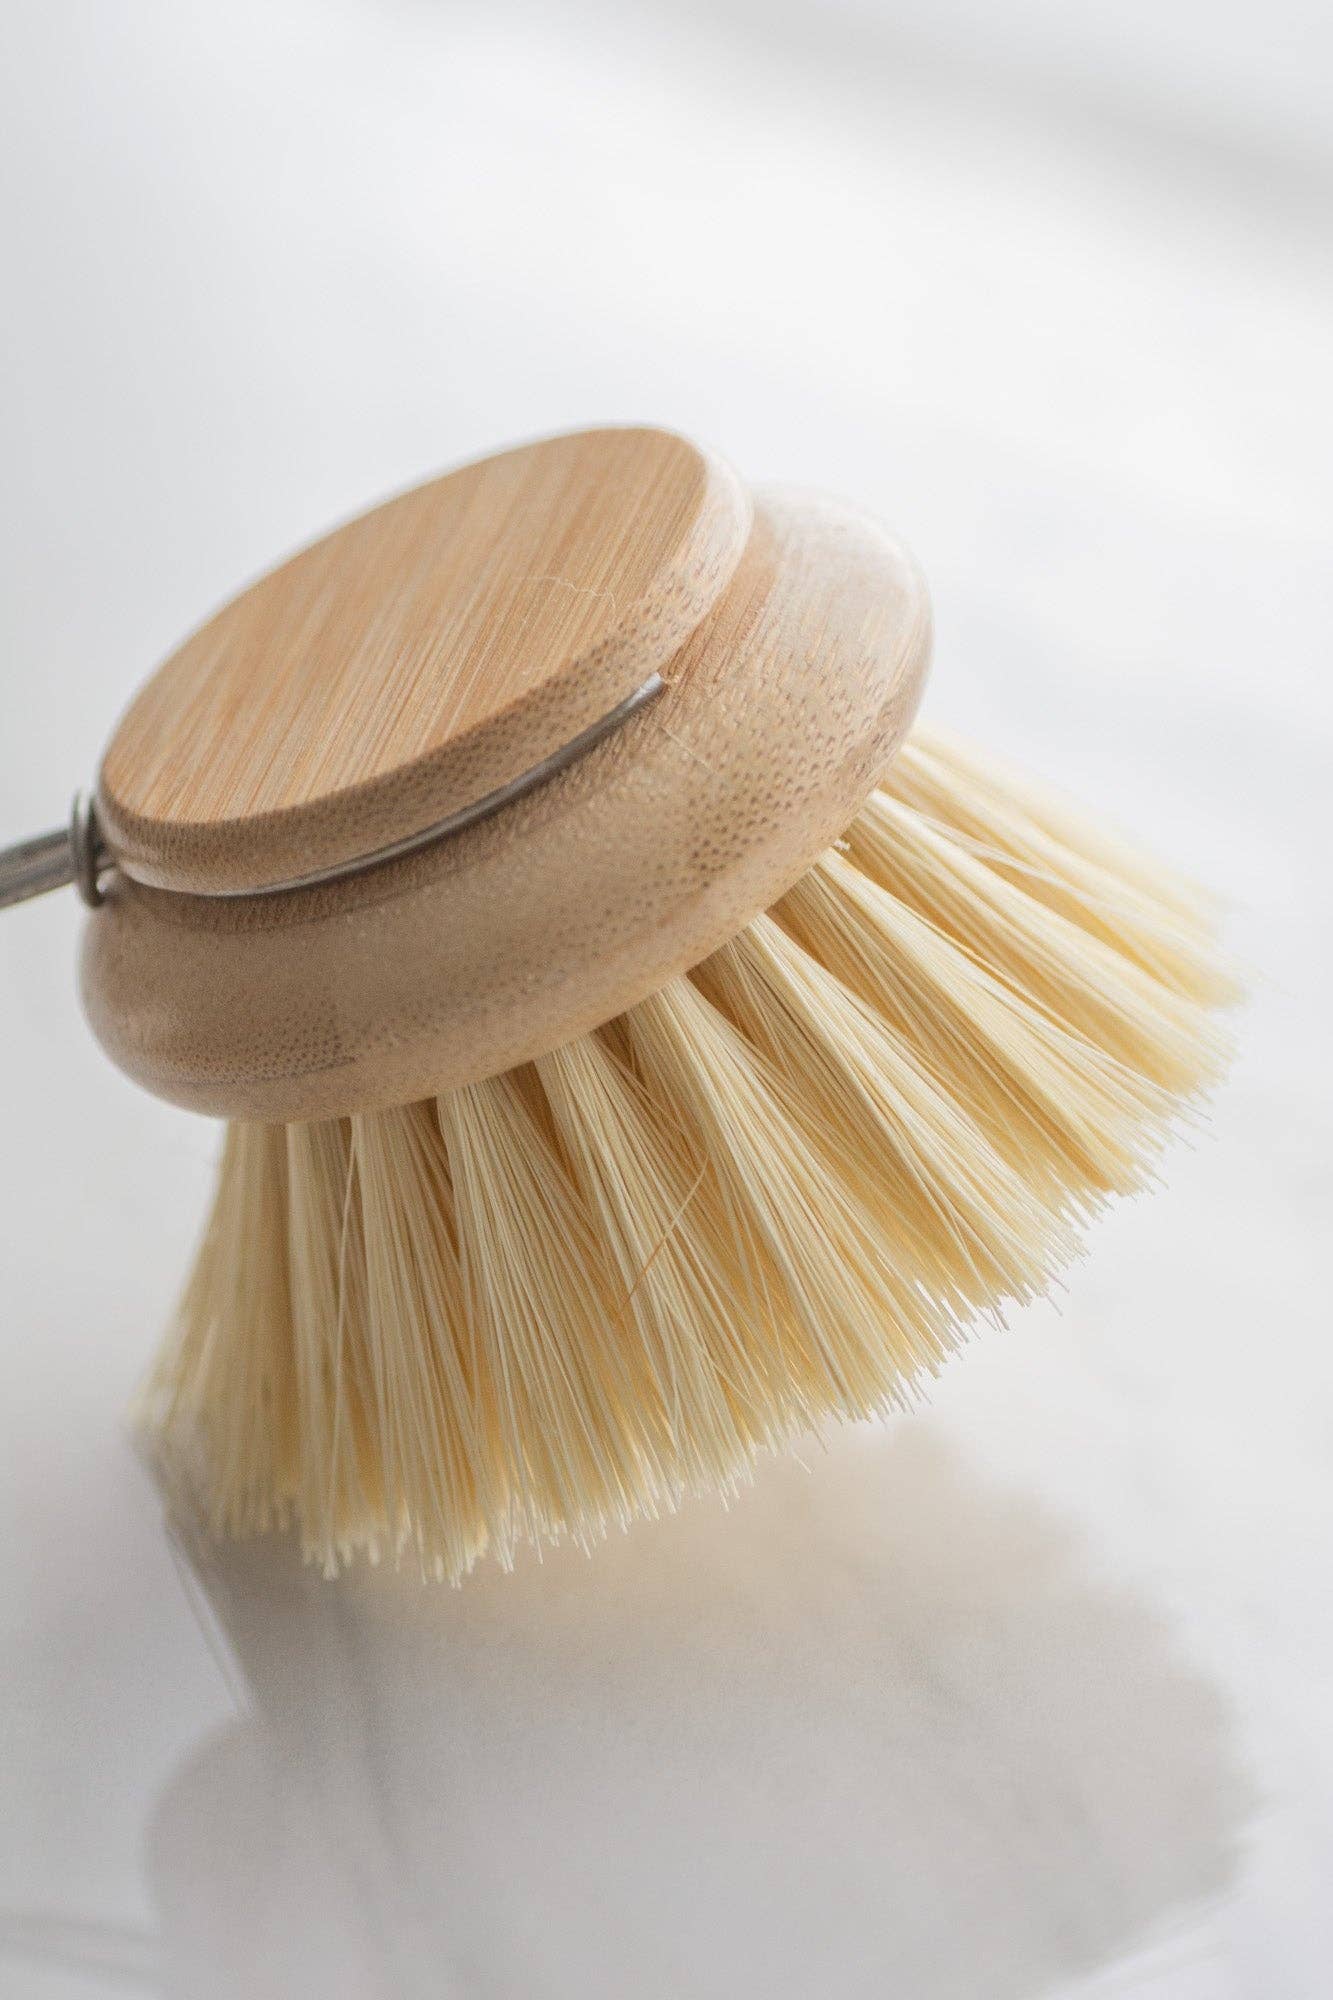 Moso bamboo brush head